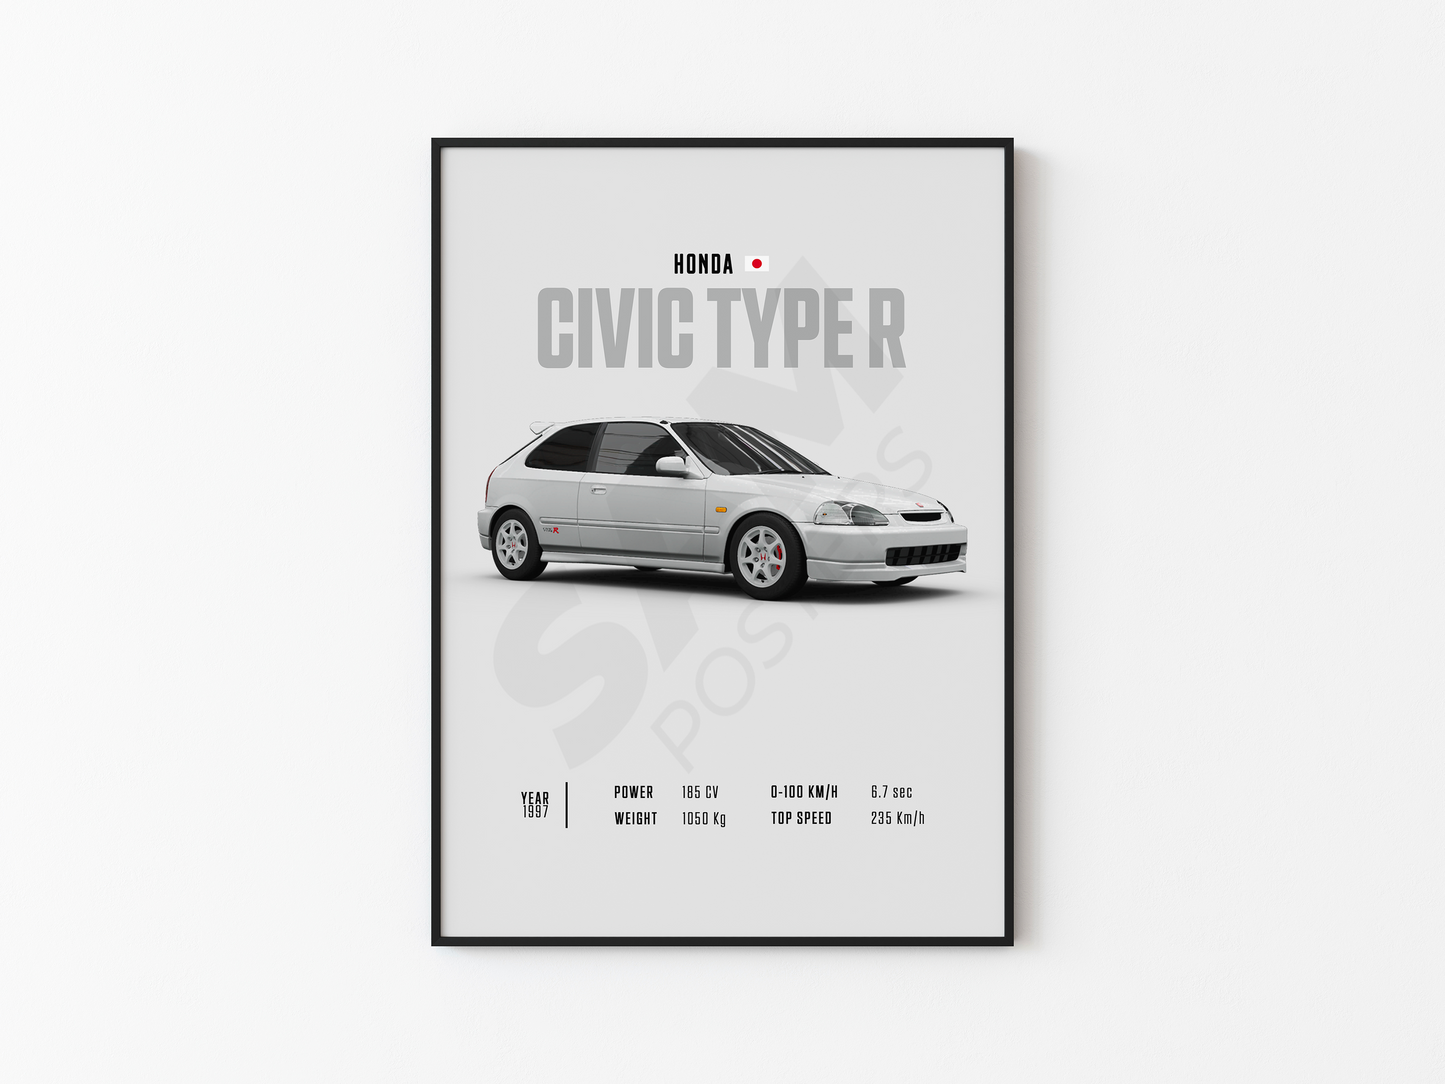 Honda Civic Type R 1997 Poster